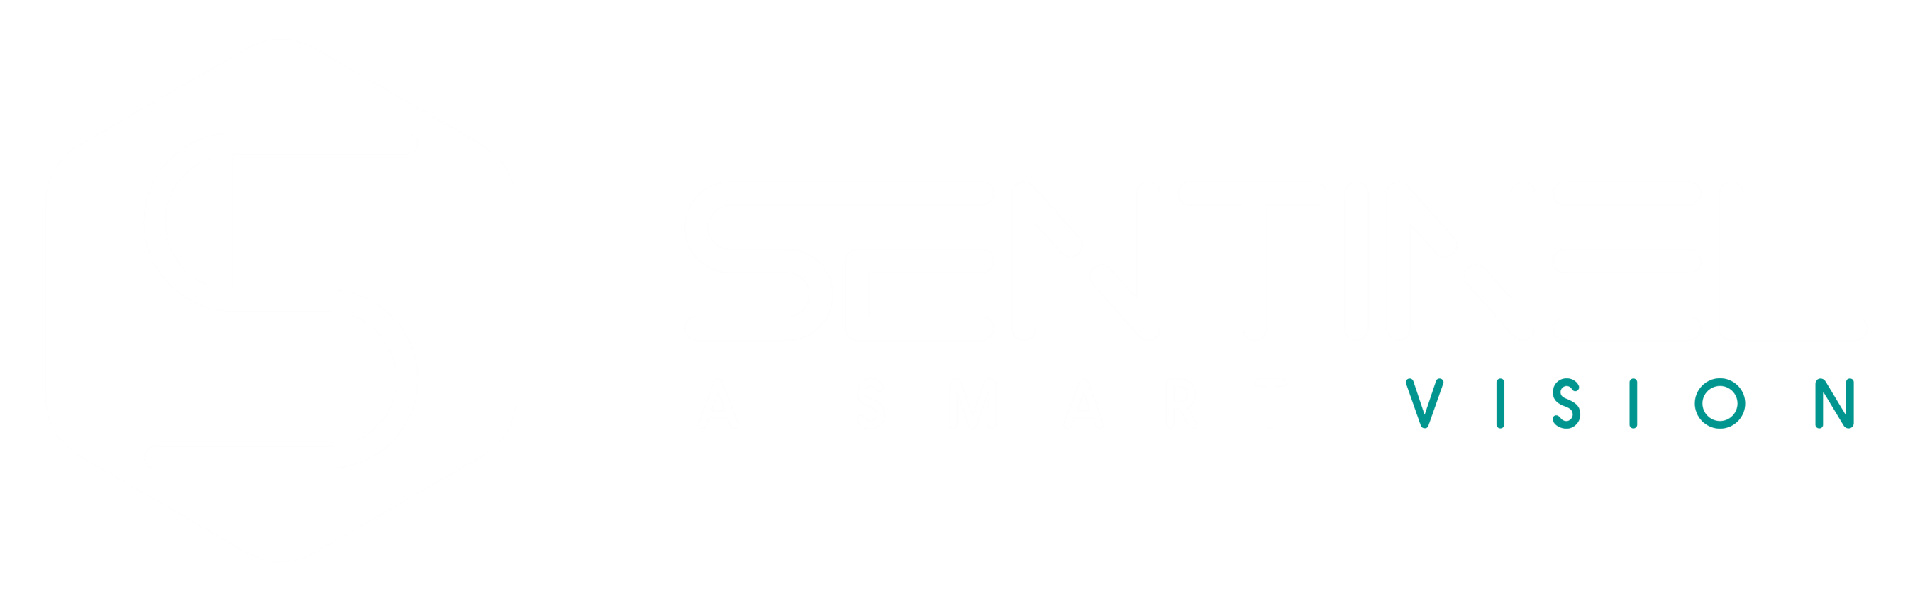 Sentinelconcept - Unipessoal